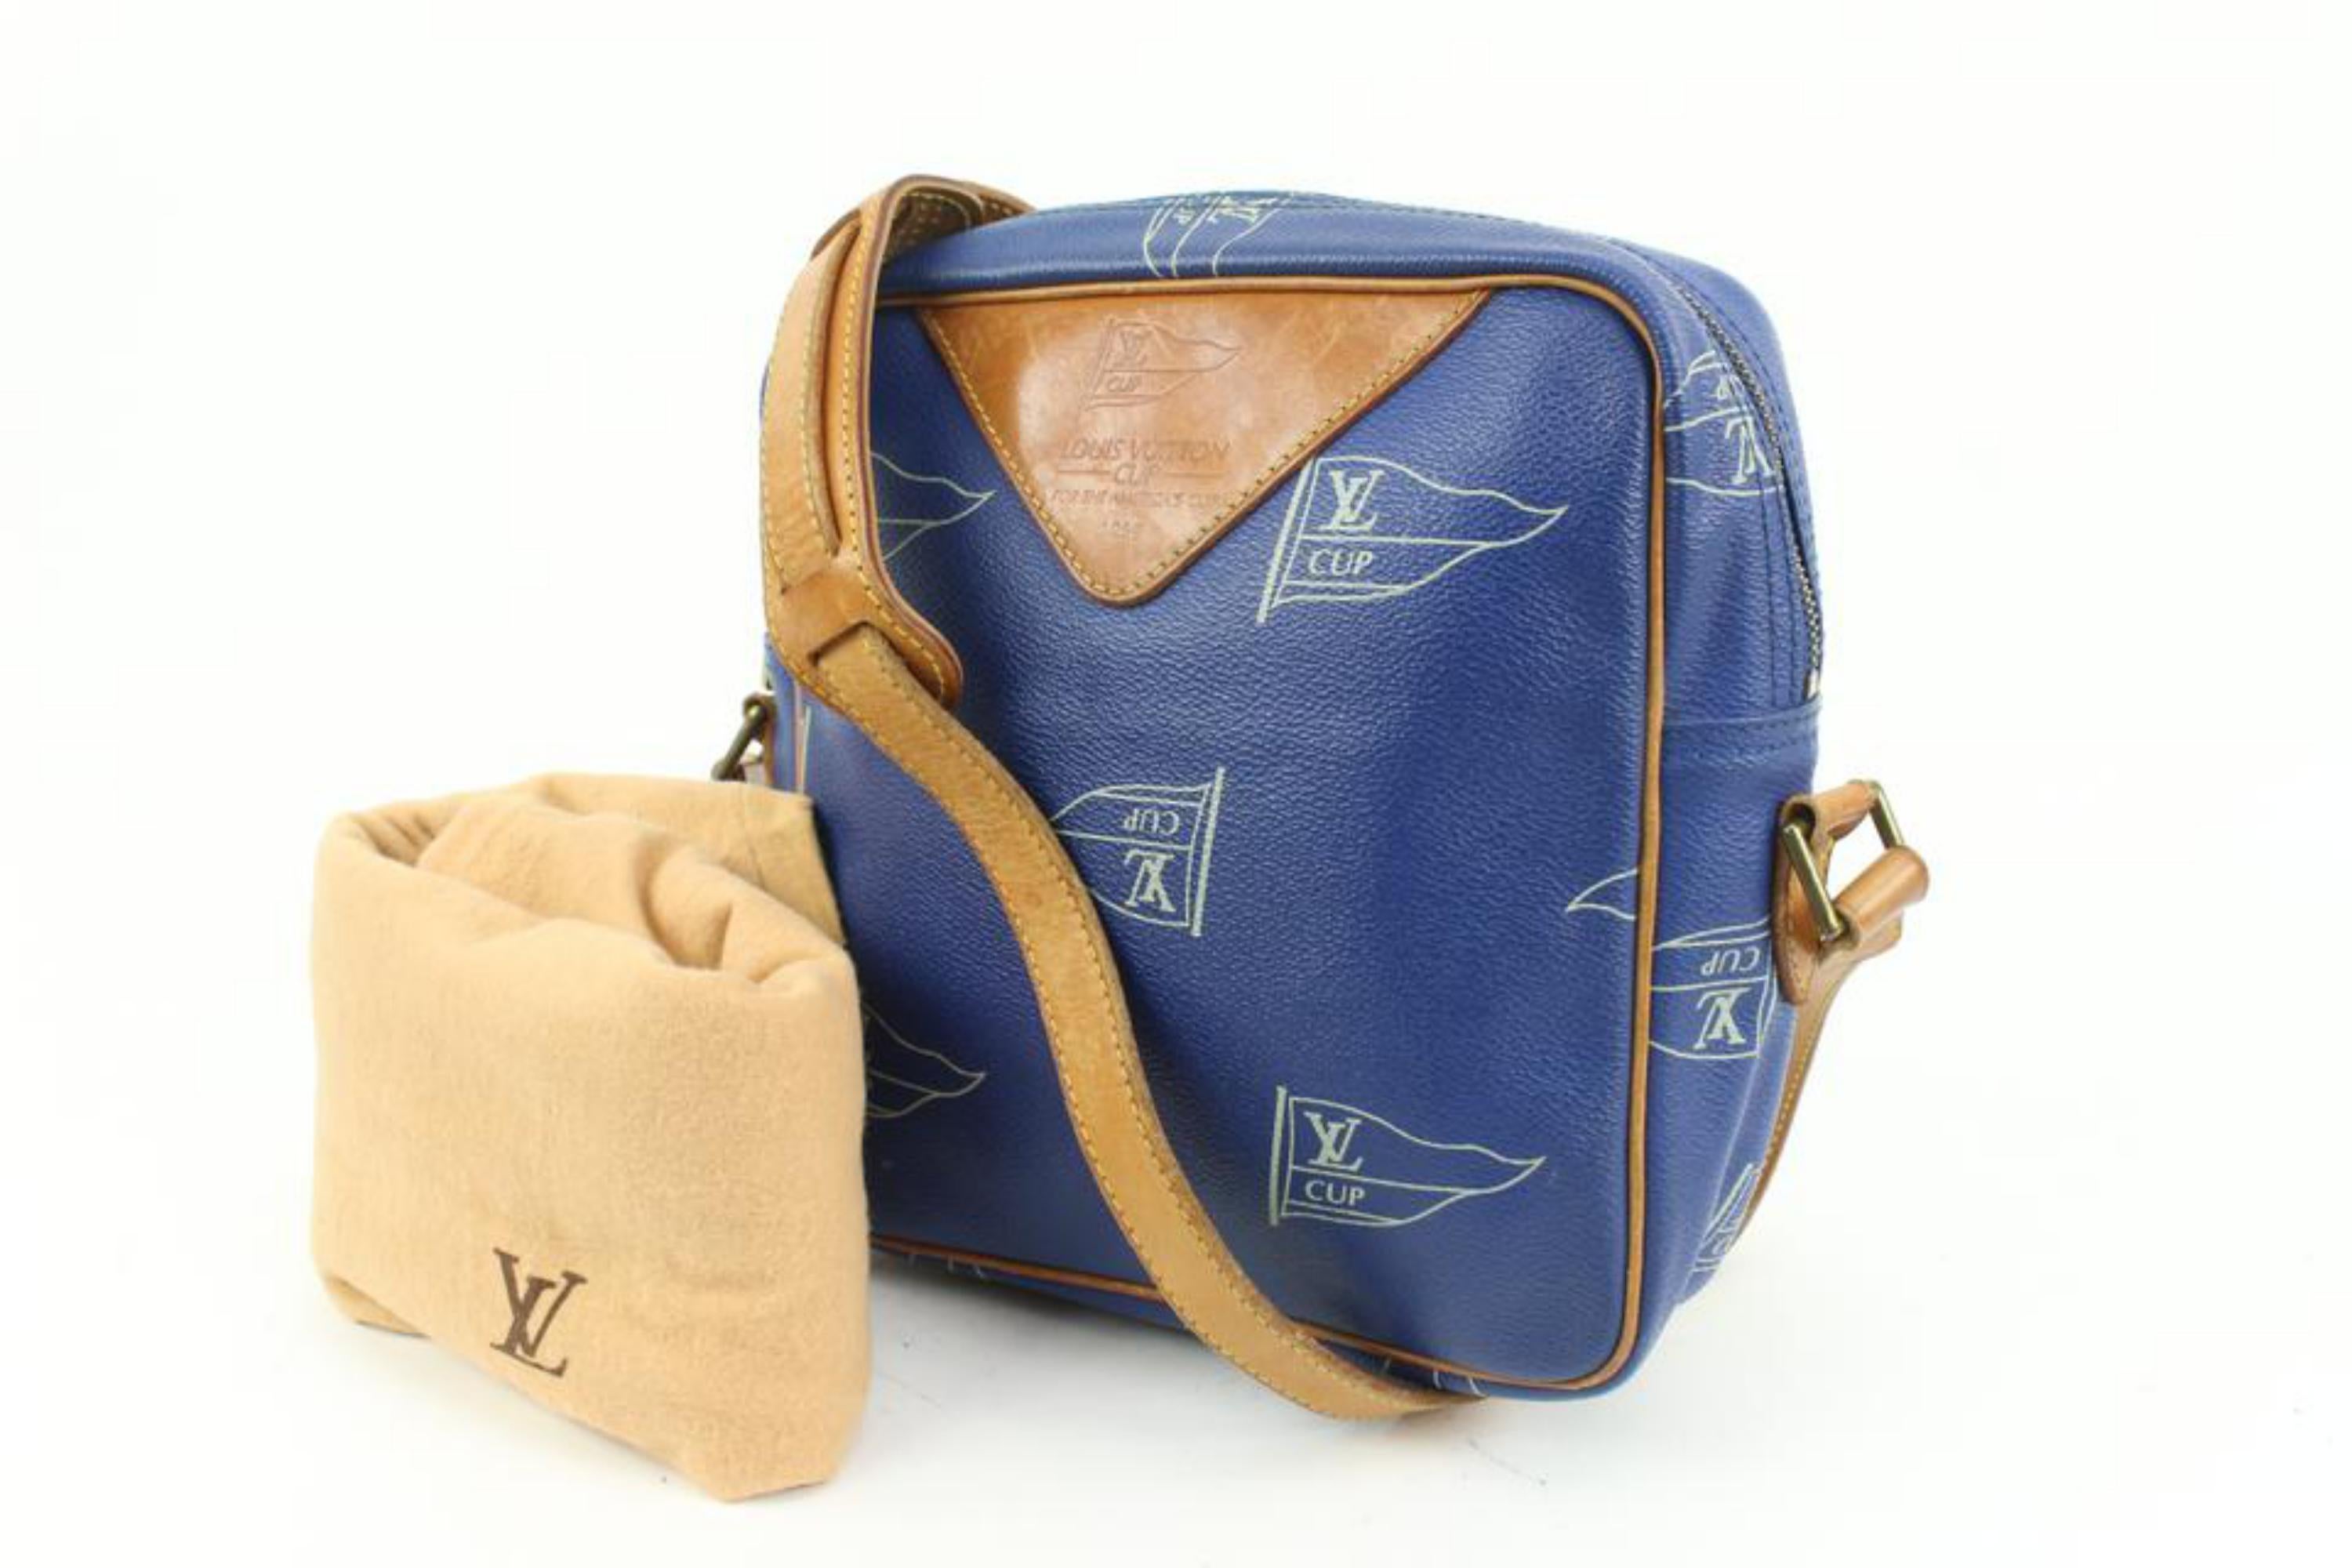 Louis Vuitton 1991 Blue LV Cup Sac San Diego Crossbody Bag 96lz425s For Sale 5